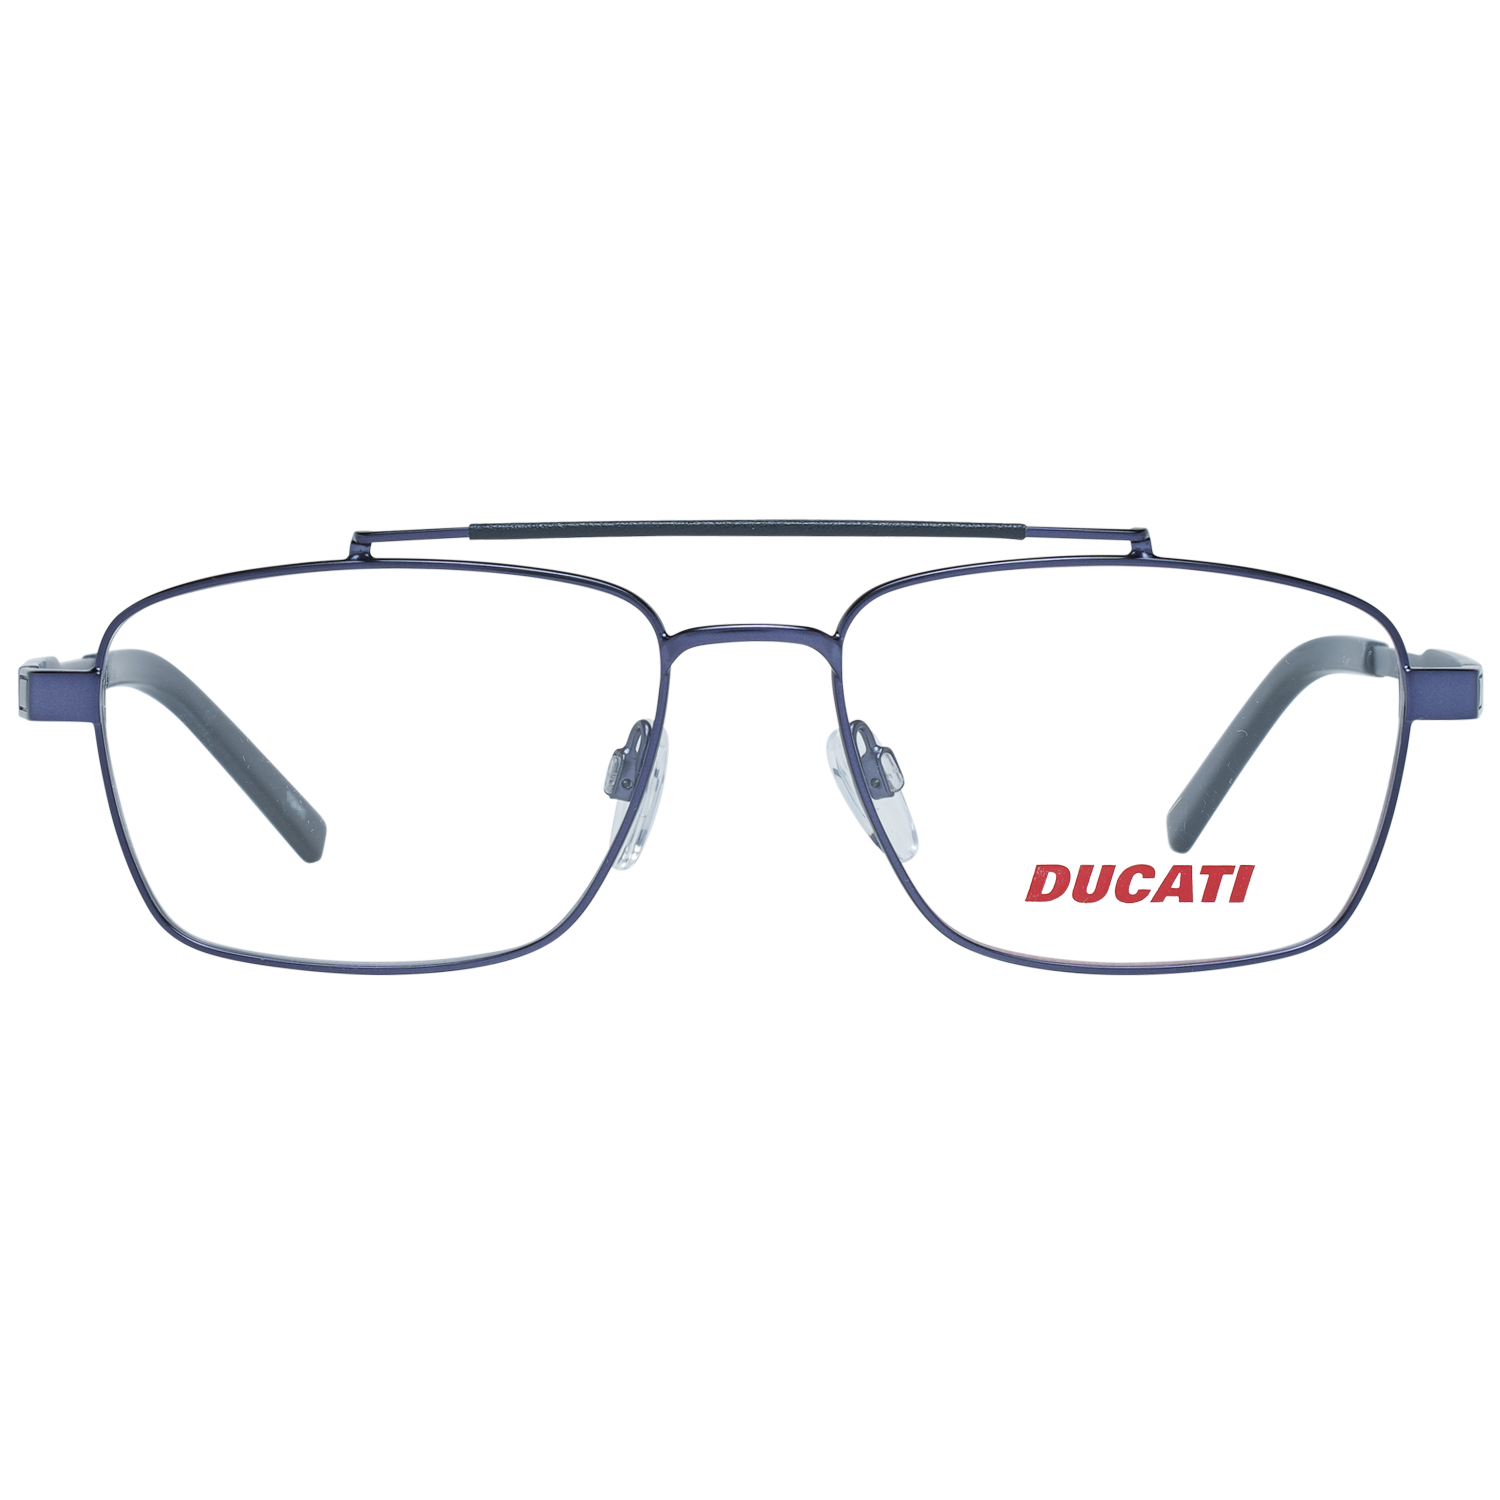 Ducati Frames Ducati Optical Frame DA3019 608 54 Eyeglasses Eyewear UK USA Australia 